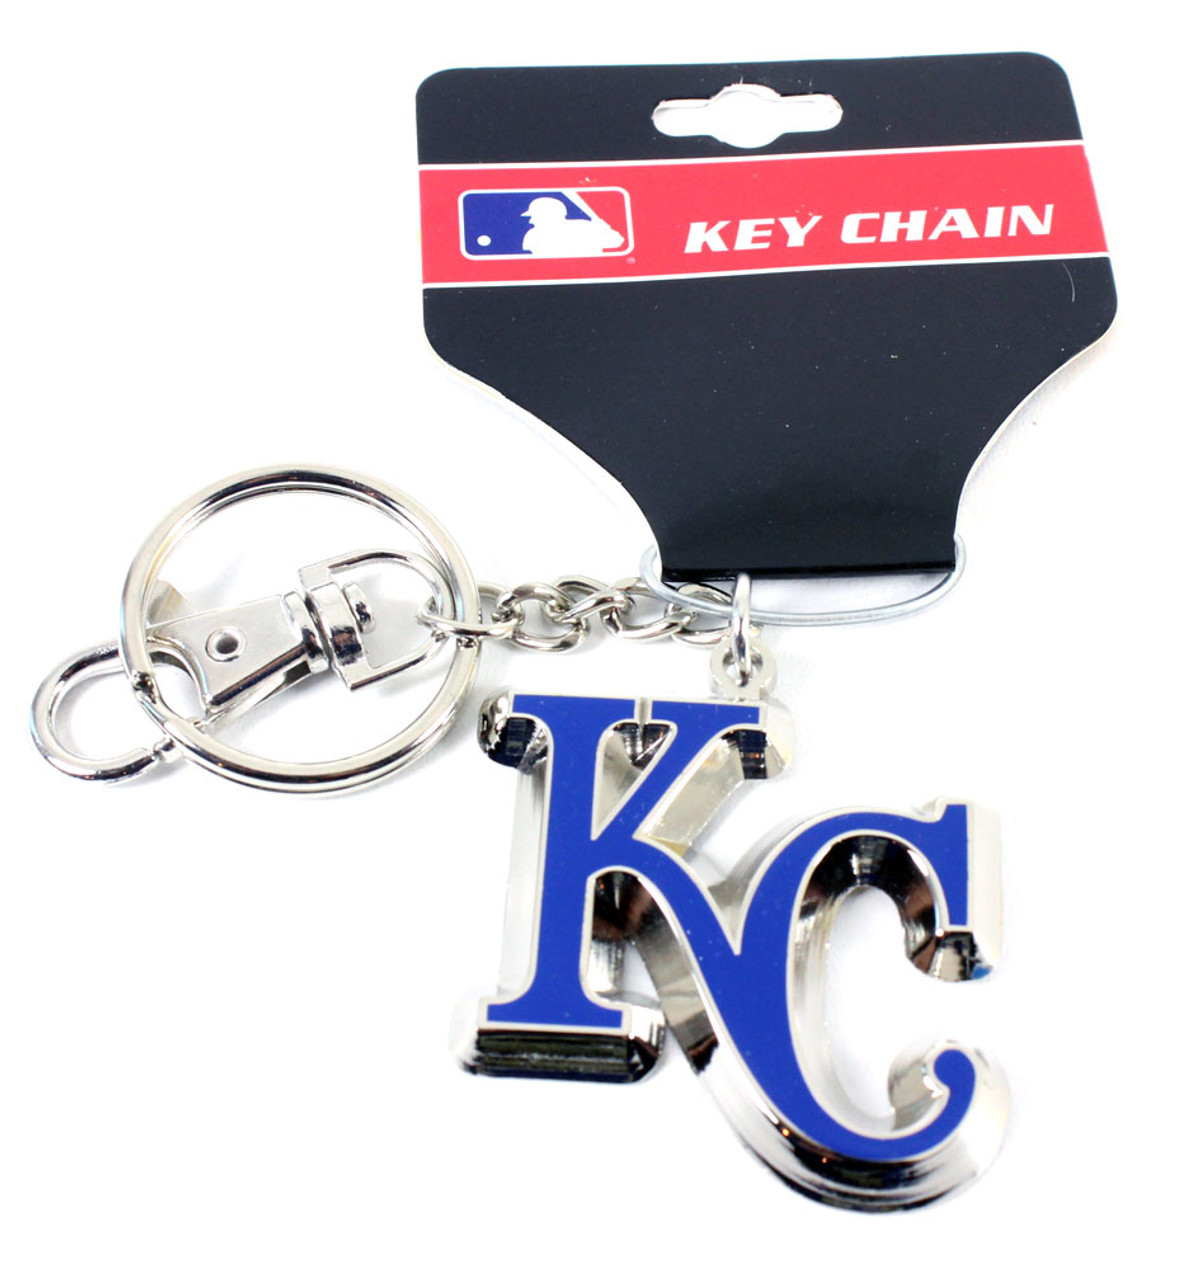 Aminco Wristlet Lanyard Keychain MLB Baseball 9 Key Ring Pick Your Team Souvenirs Milwaukee Brewers